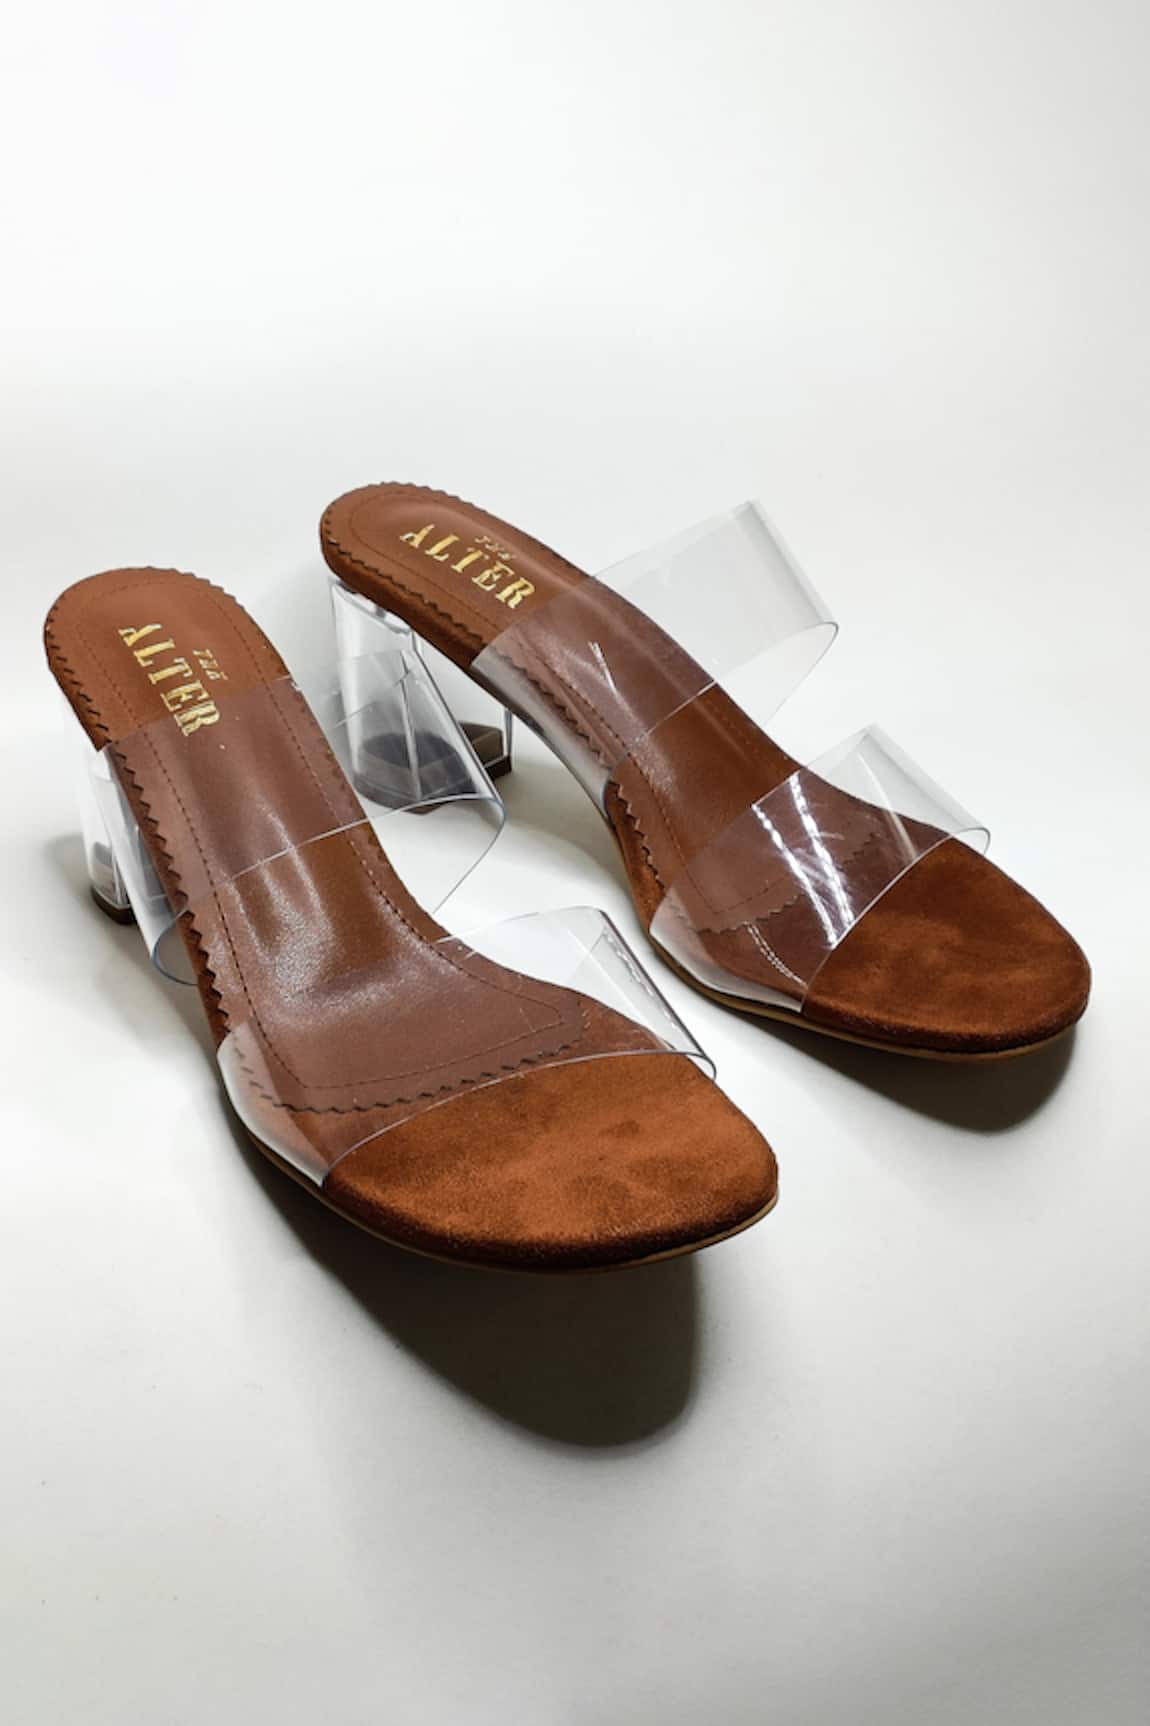 JCrew $128 Double-Strap Suede Slides Sz 6 Cabana Blue Sandal Heels G0970 |  eBay